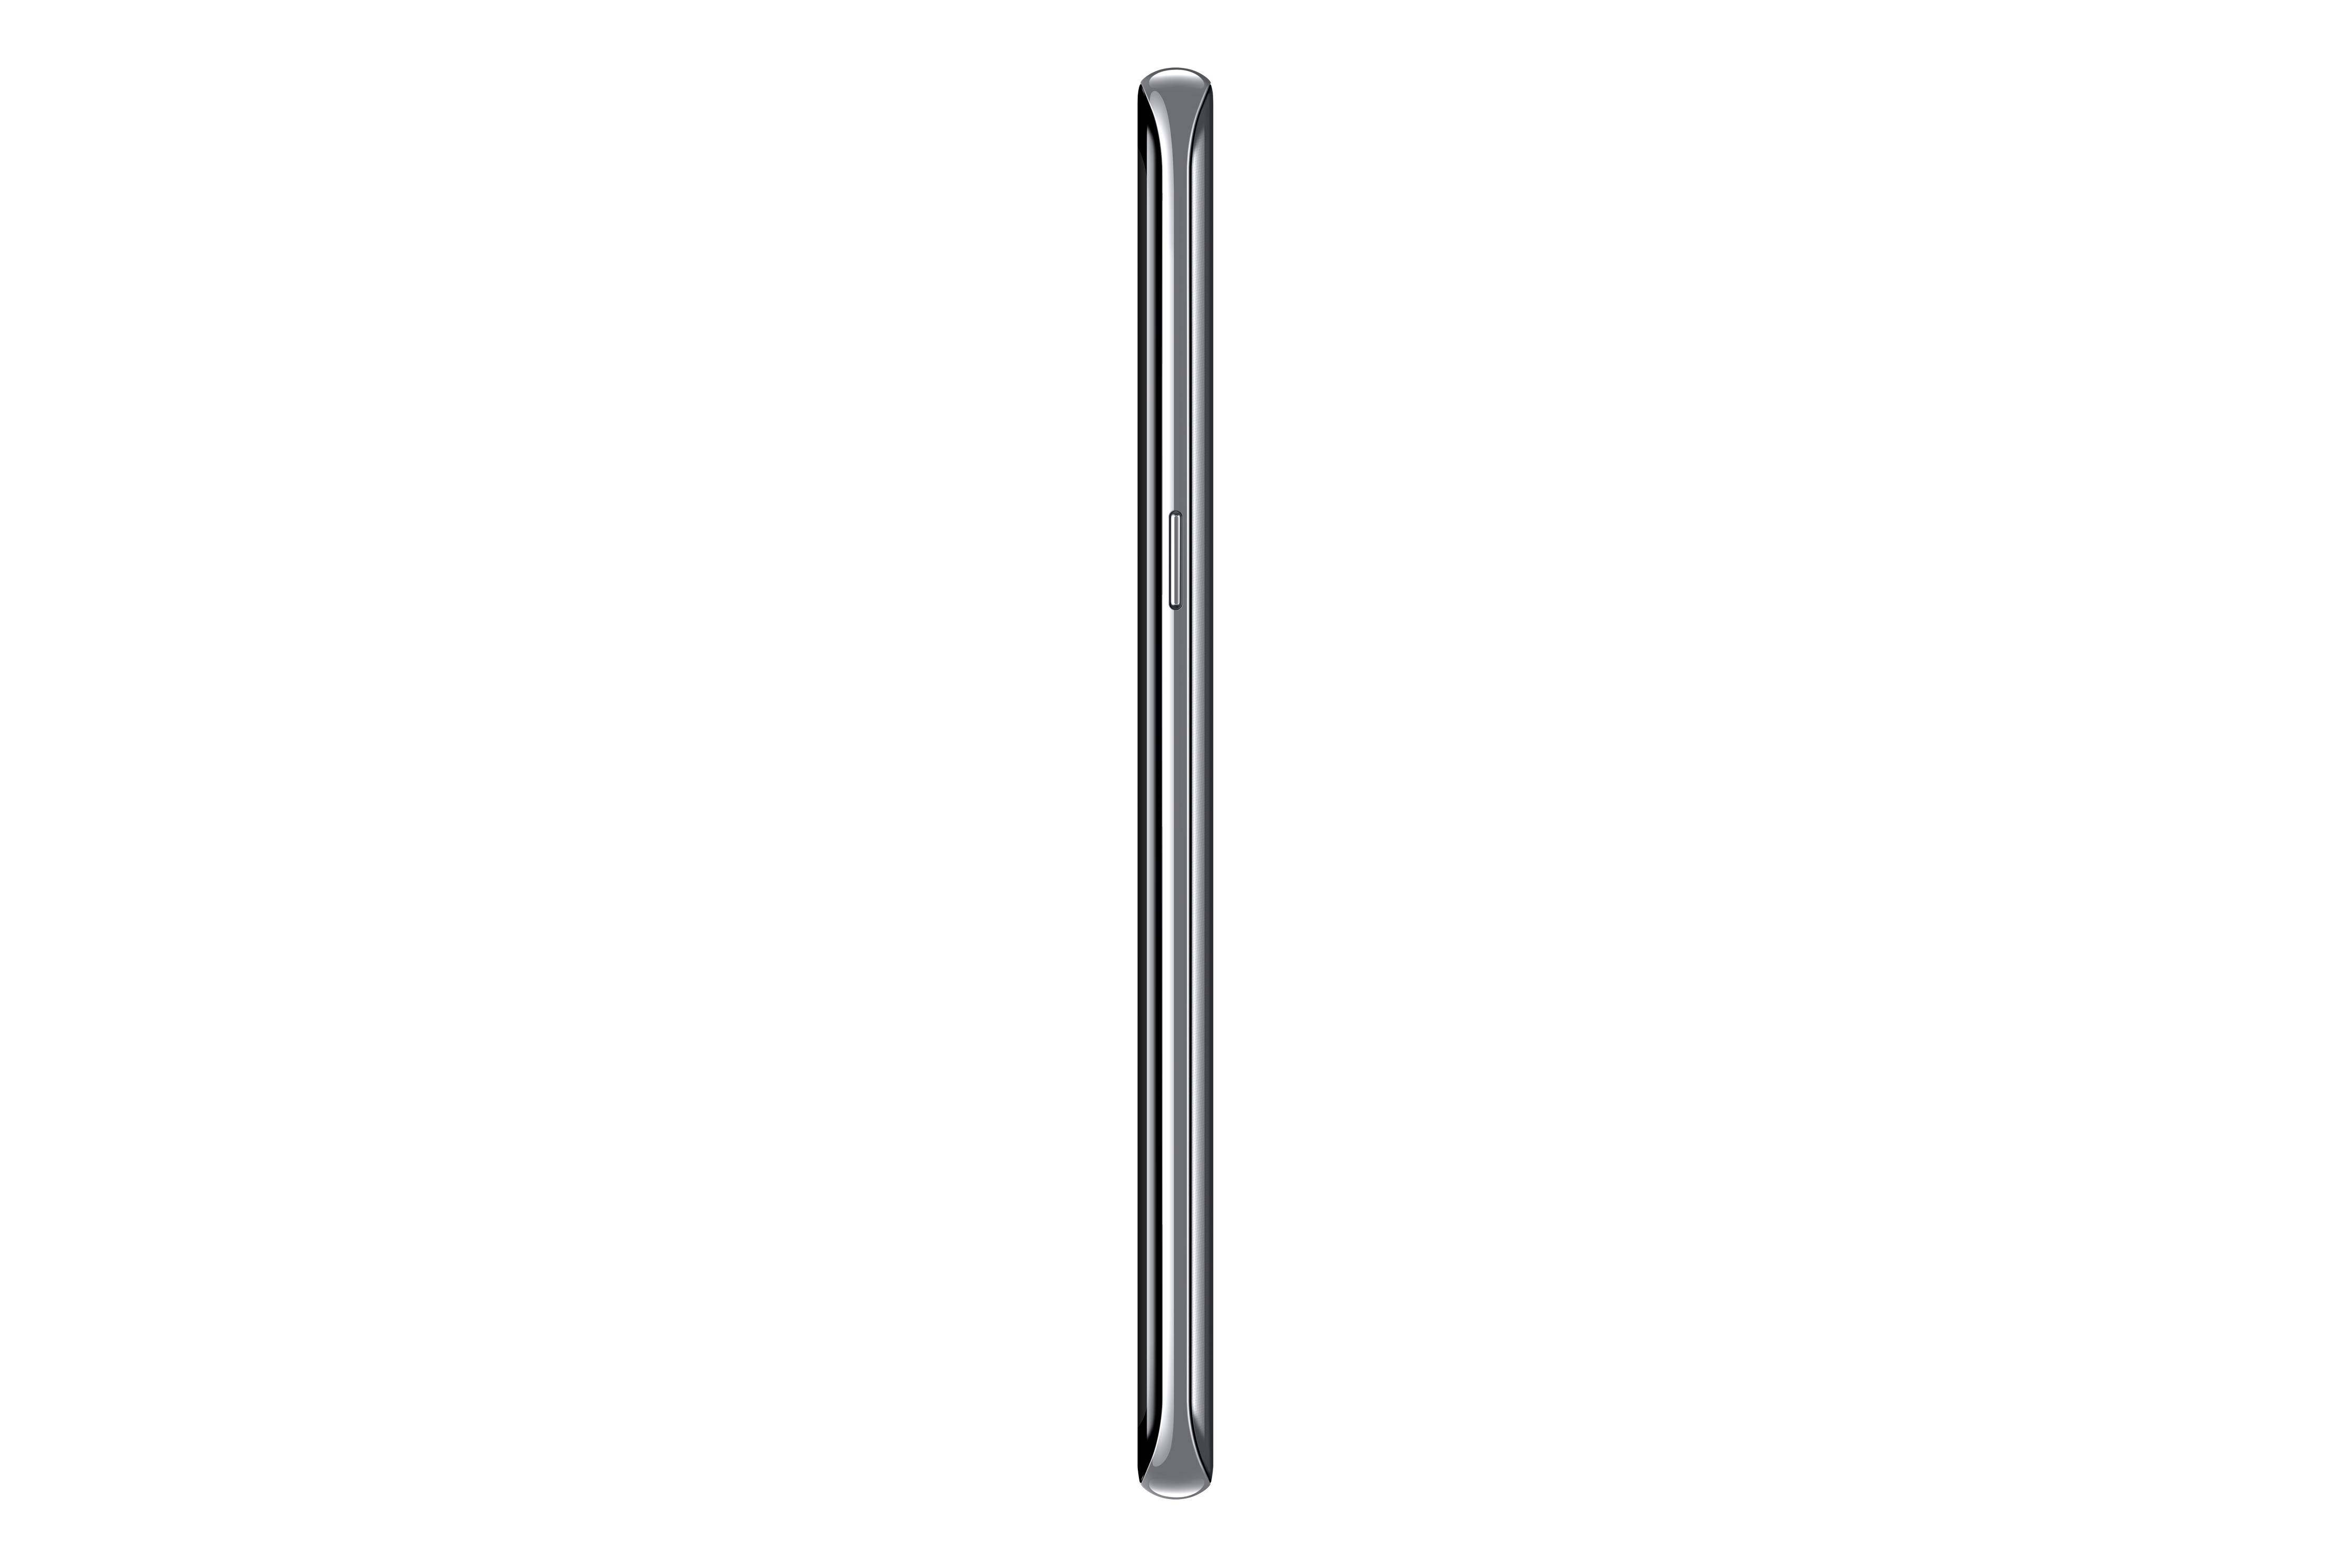 Samsung Galaxy S8, Silver (Sprint) - image 5 of 5